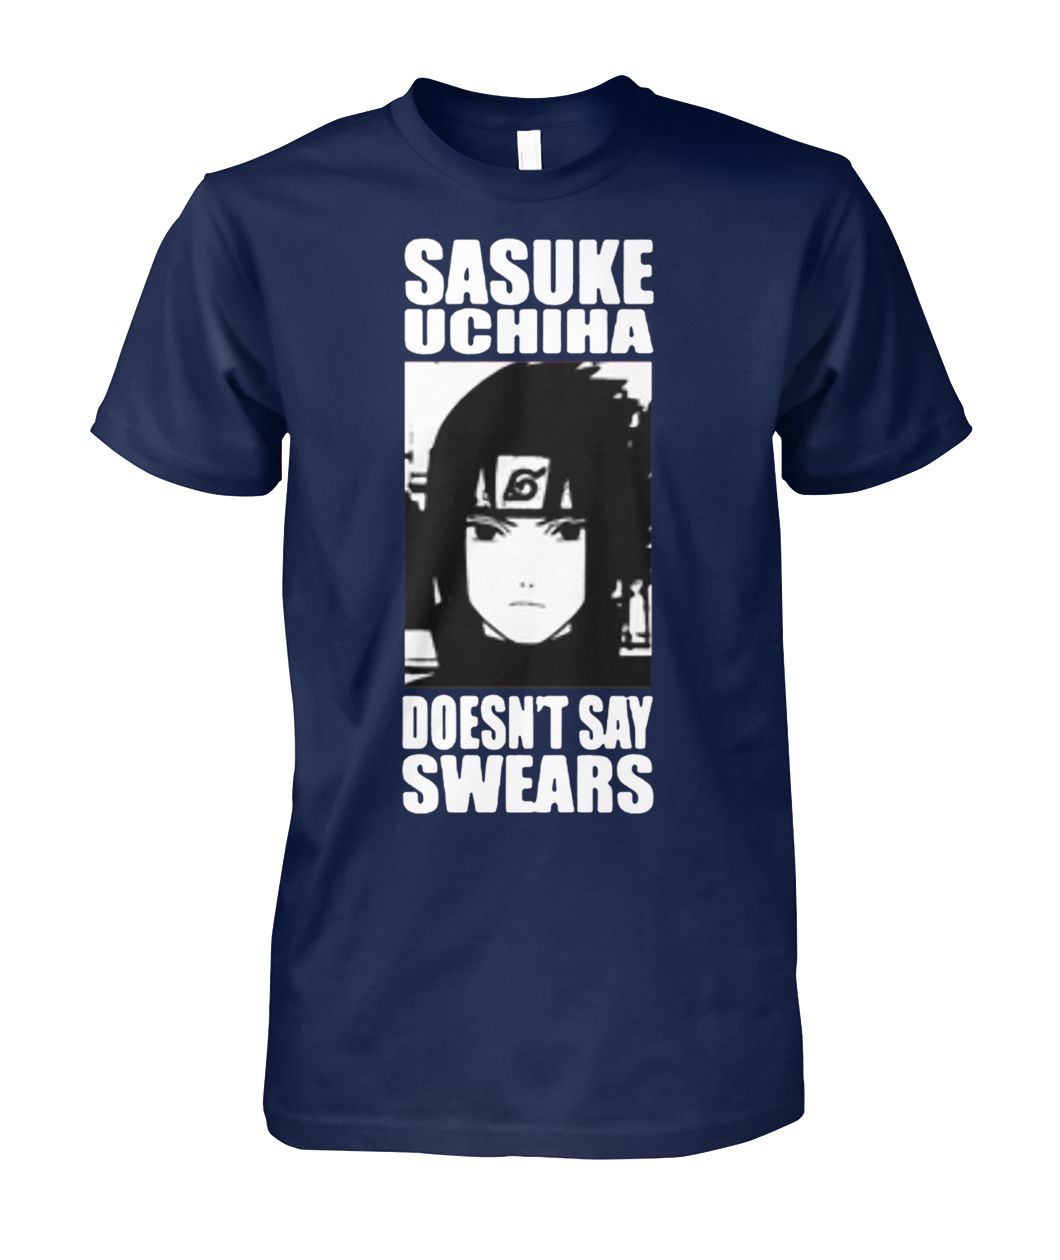 Naruto sasuke uchiha doesn’t say swears shirt